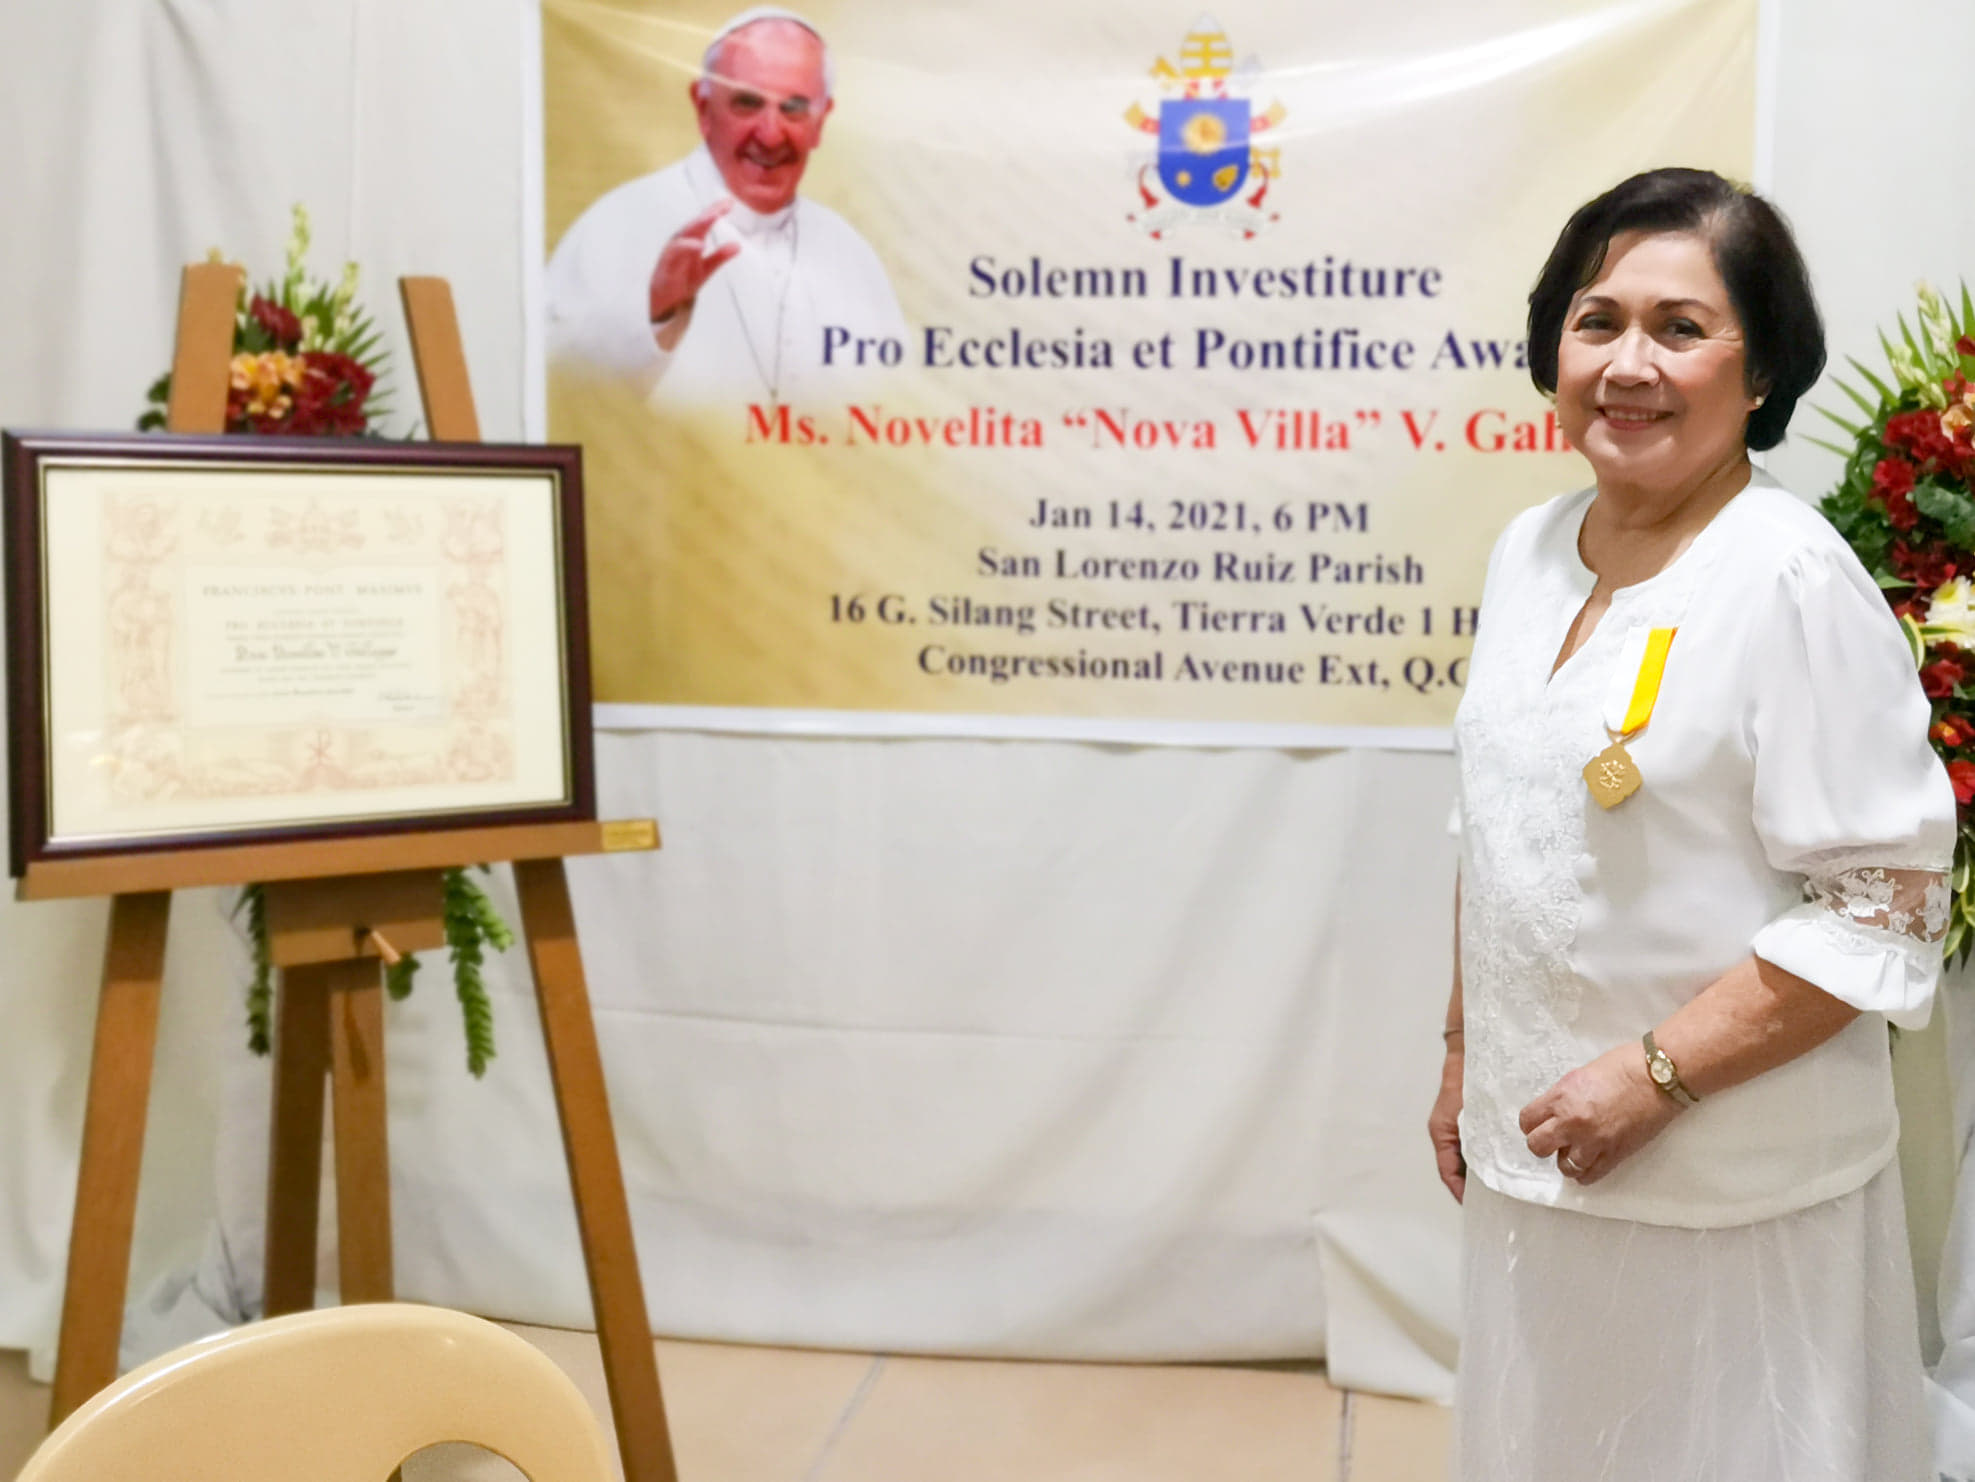 Nova Villa Papal Award